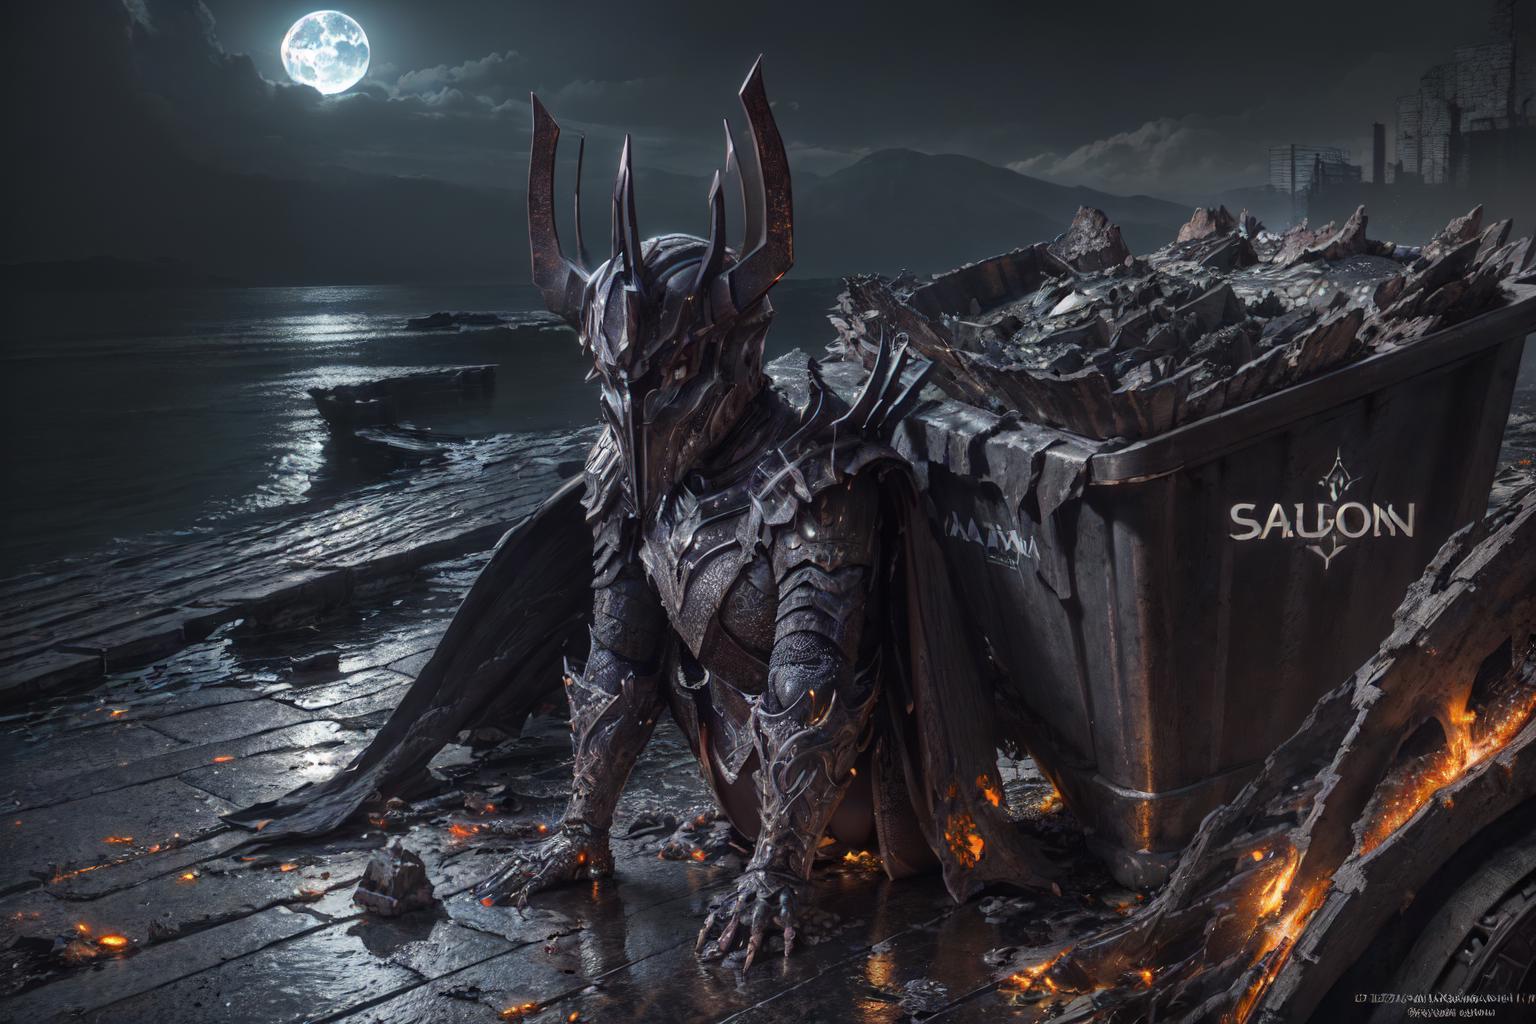 Dark Lord Sauron image by rmmnty